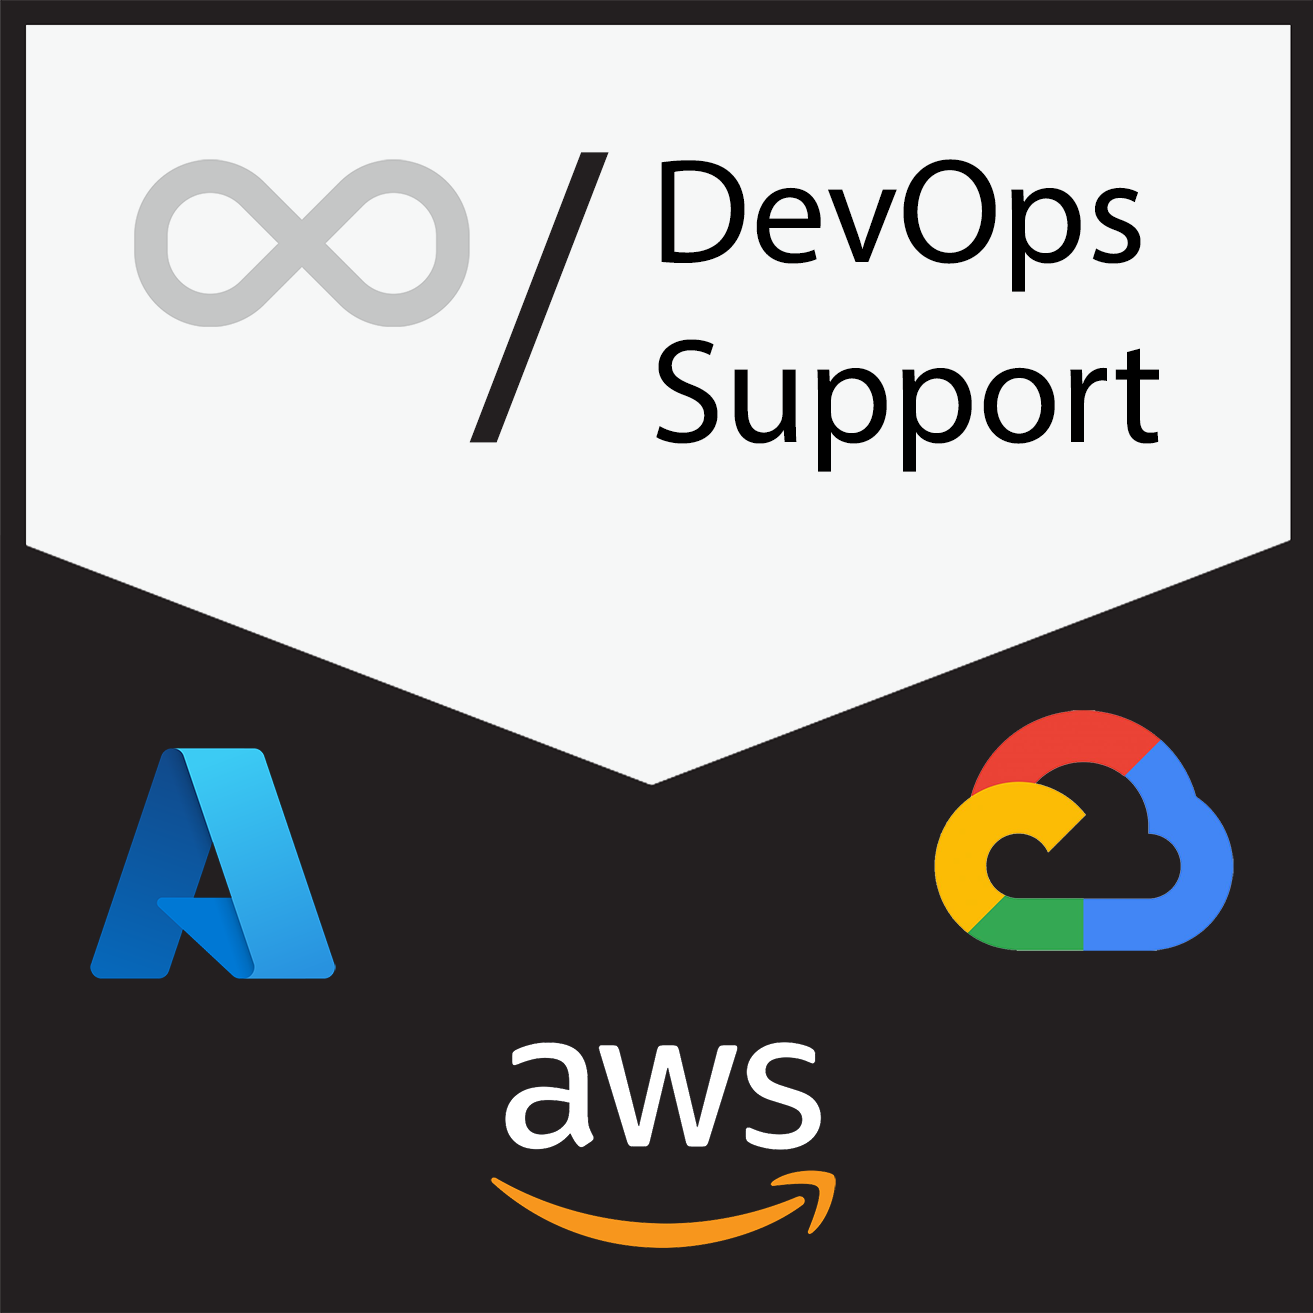 devops-support-services@0.5x